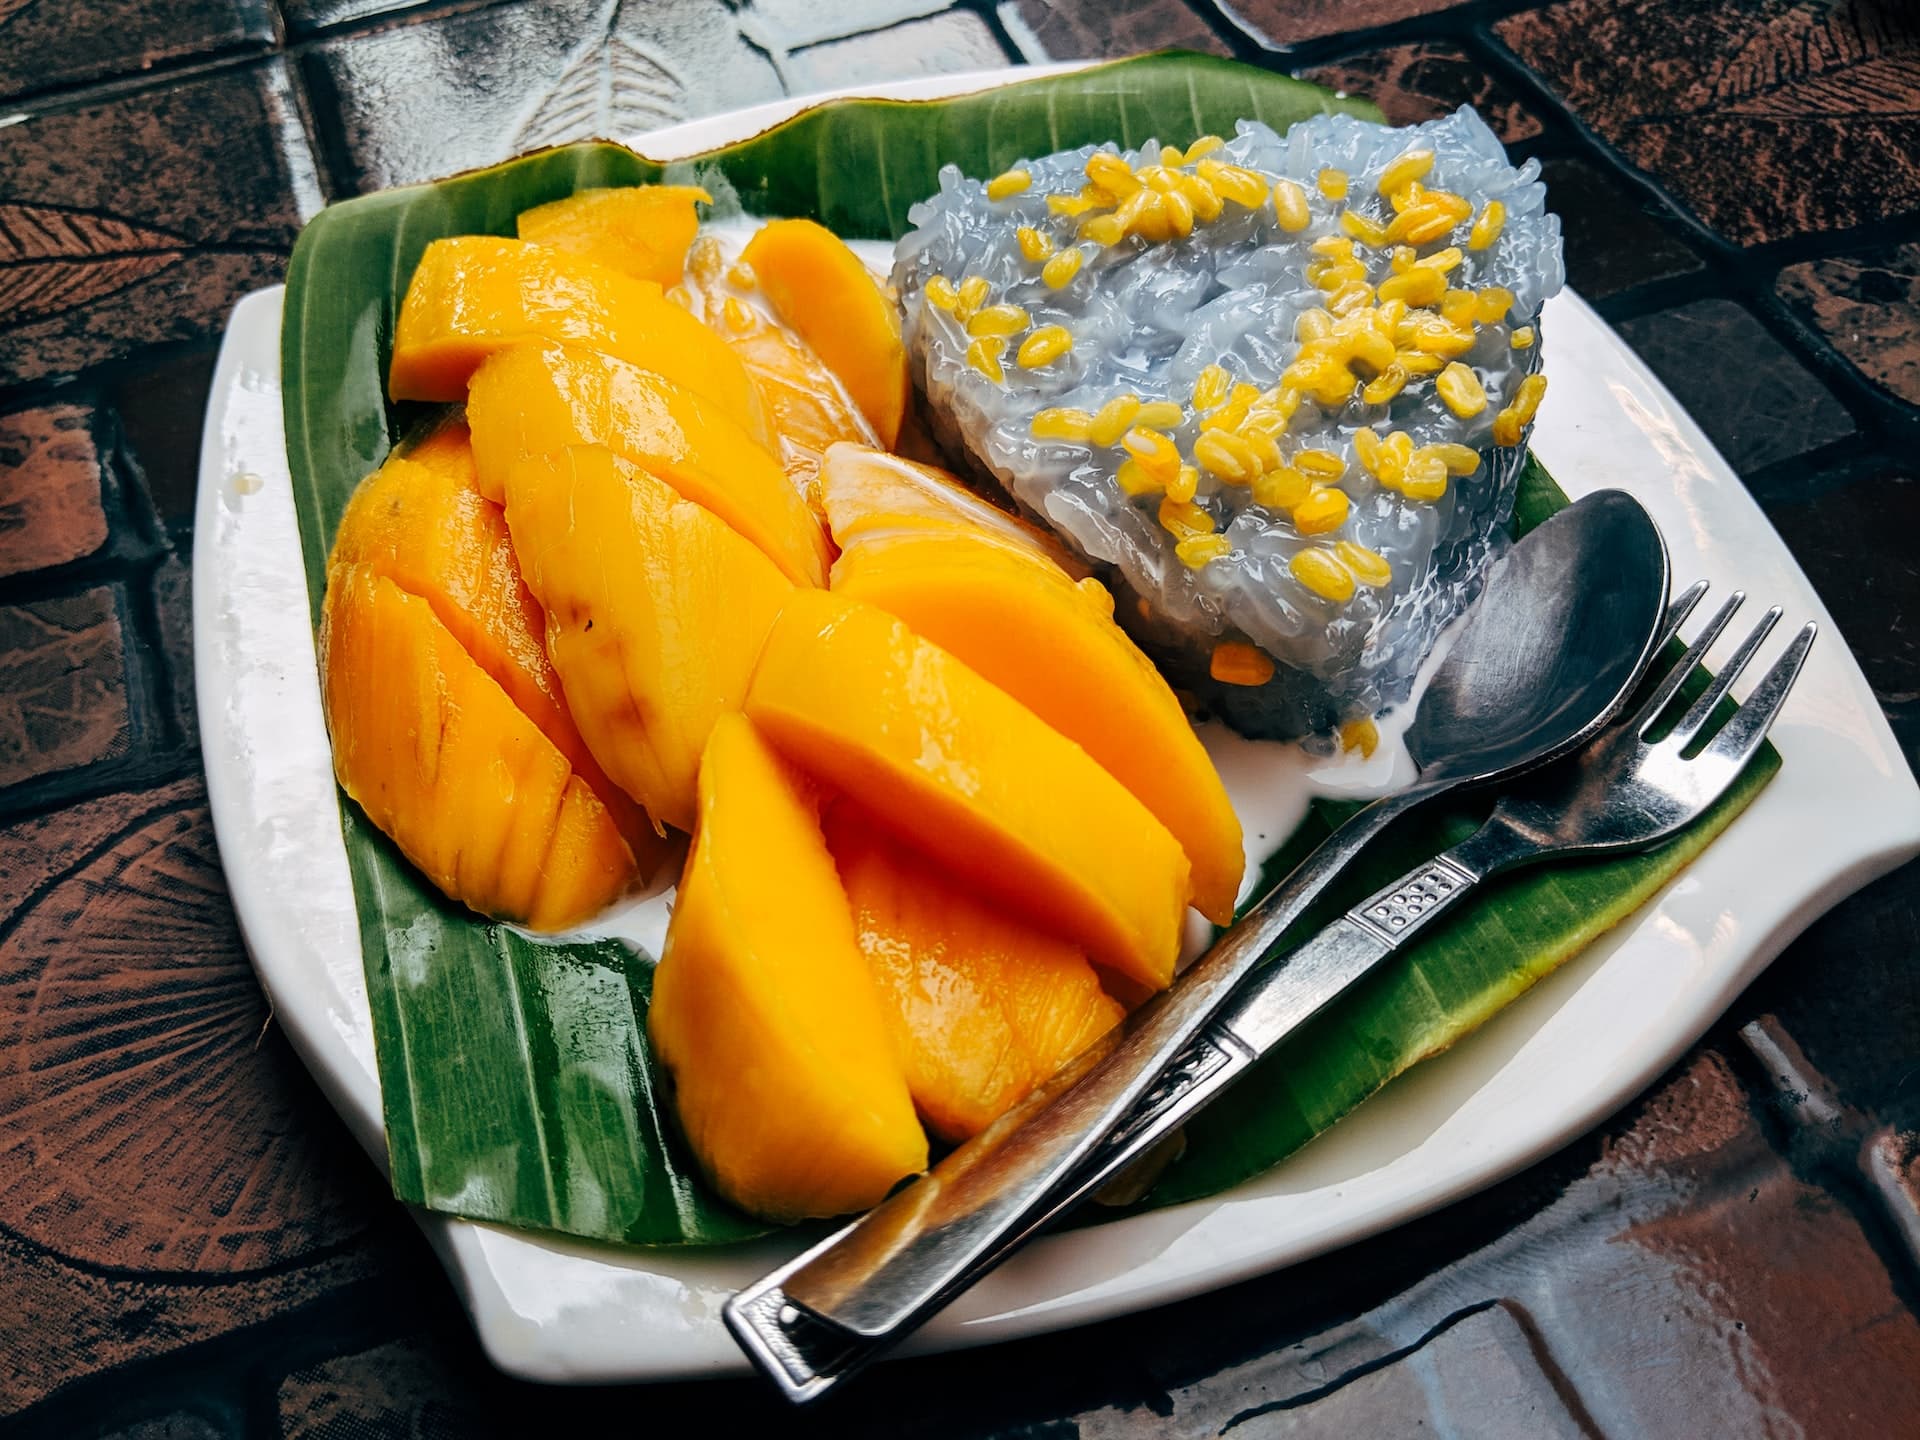 thai mango sticky rice